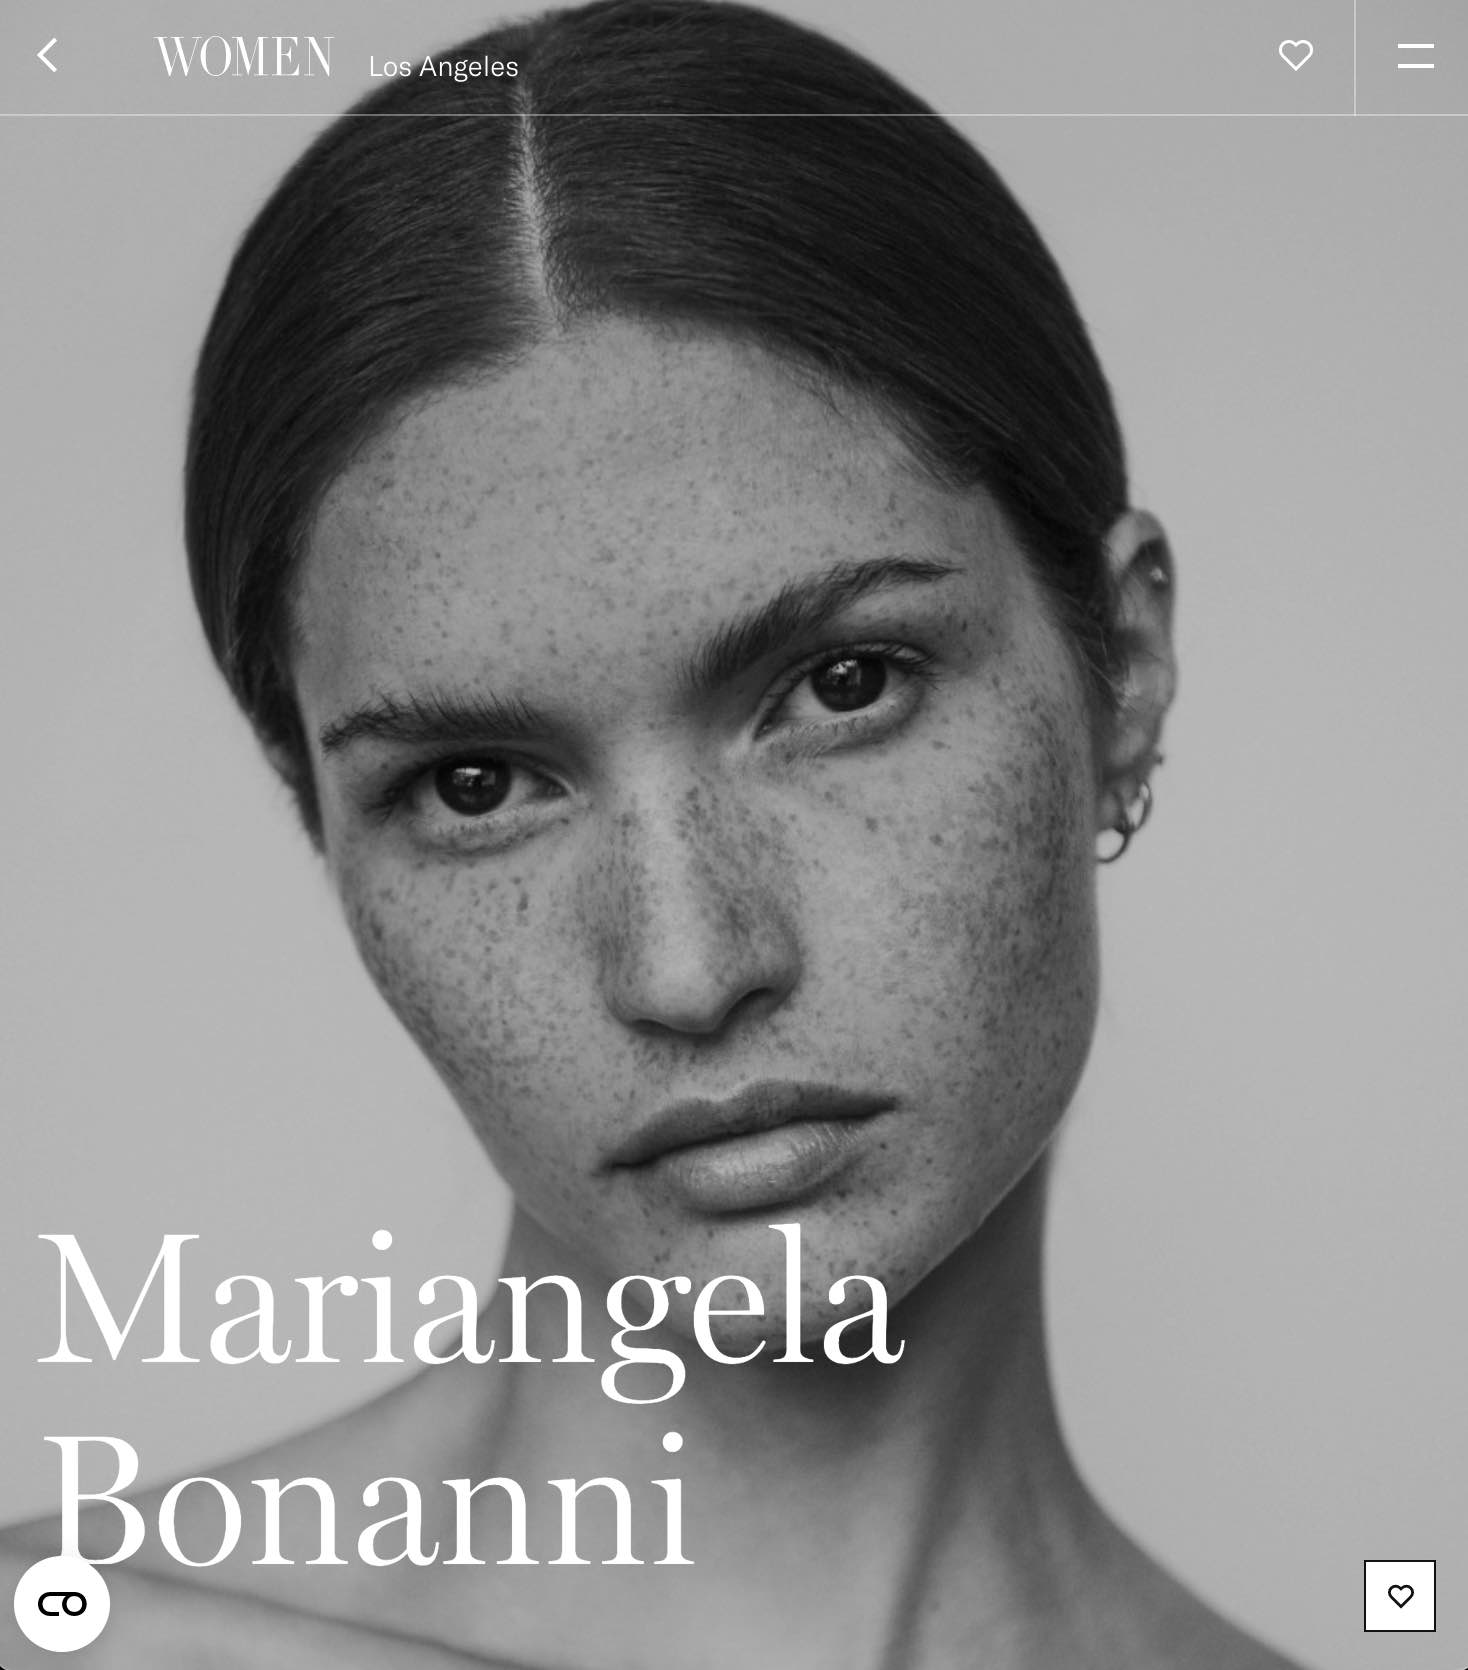 Women Management LA - Mariangela Bonanni